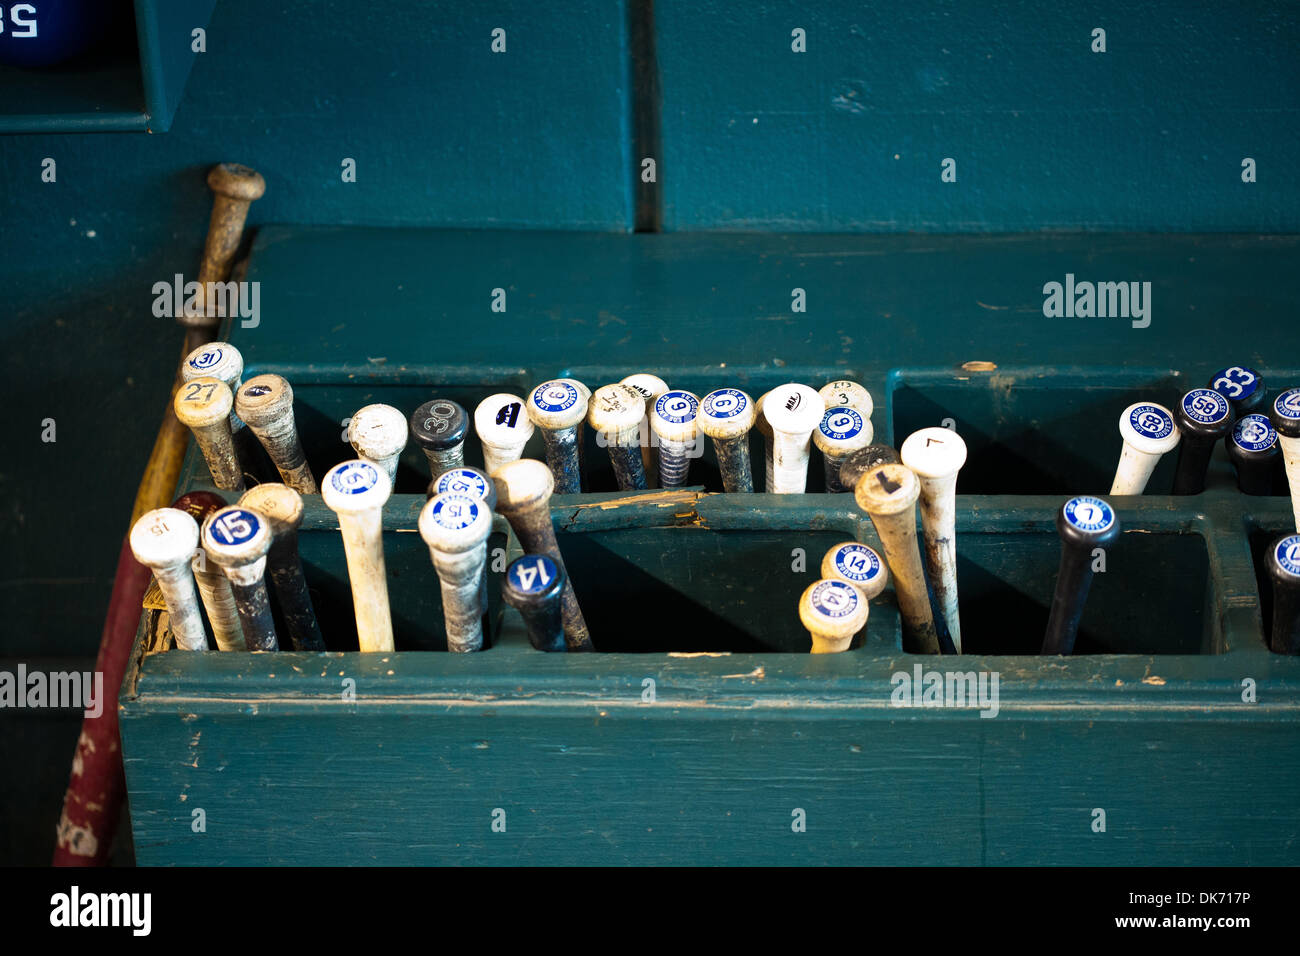 May 24, 2011 - Houston, Texas, U.S - Los Angeles bat in the dugout. (Credit Image: © Juan DeLeon/Southcreek Global/ZUMAPRESS.com) Stock Photo